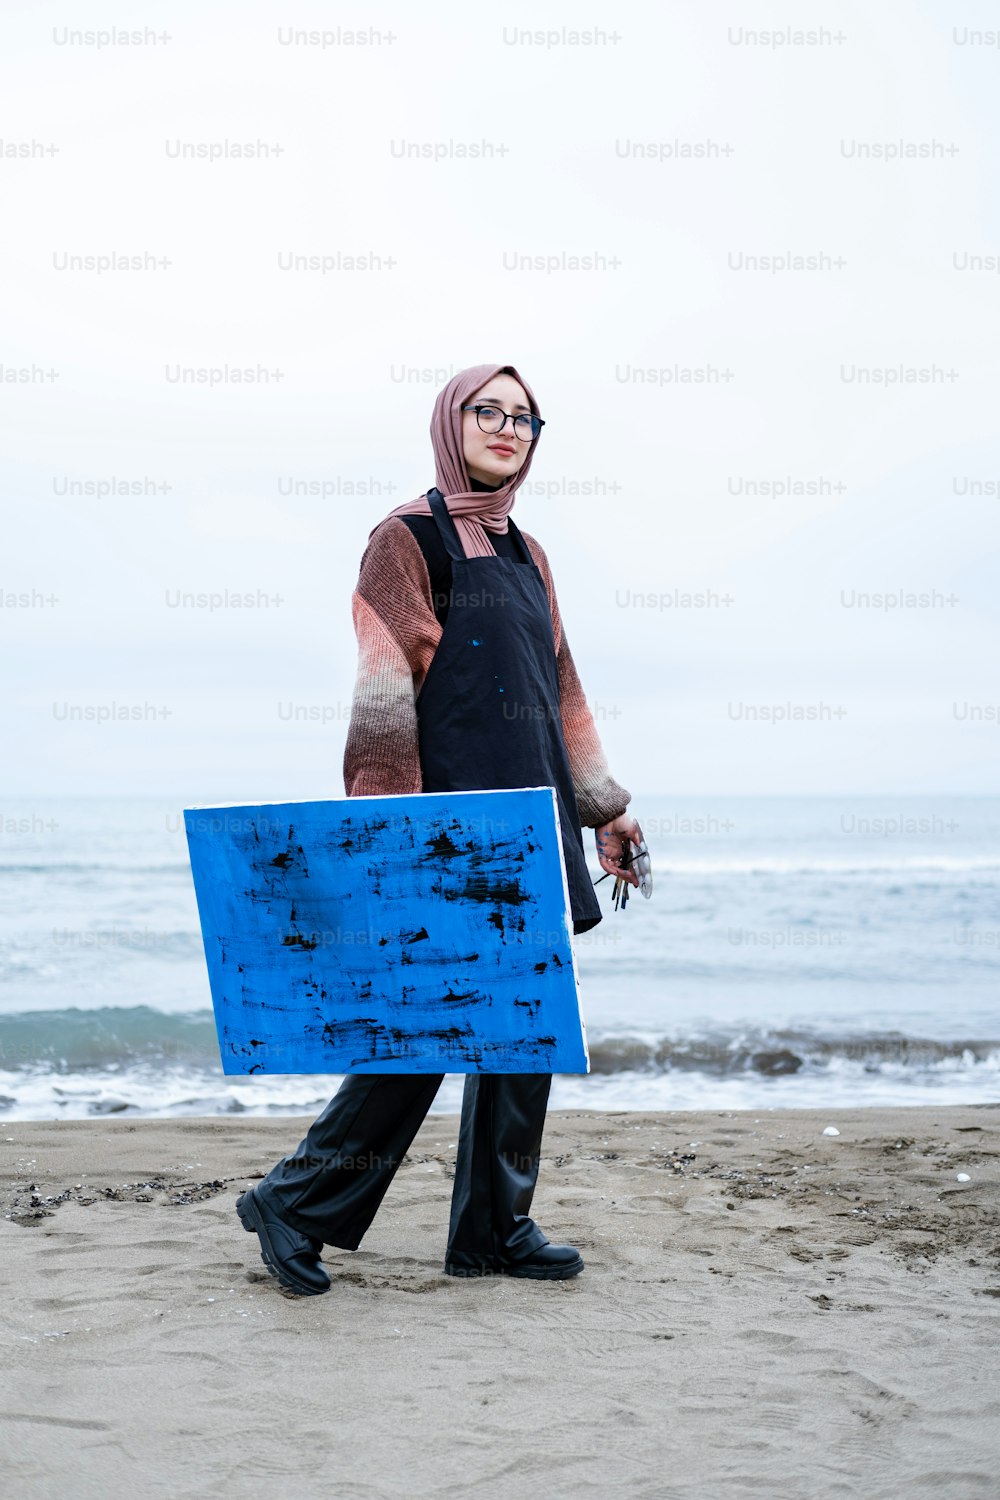 a woman walking on a beach holding a blue board